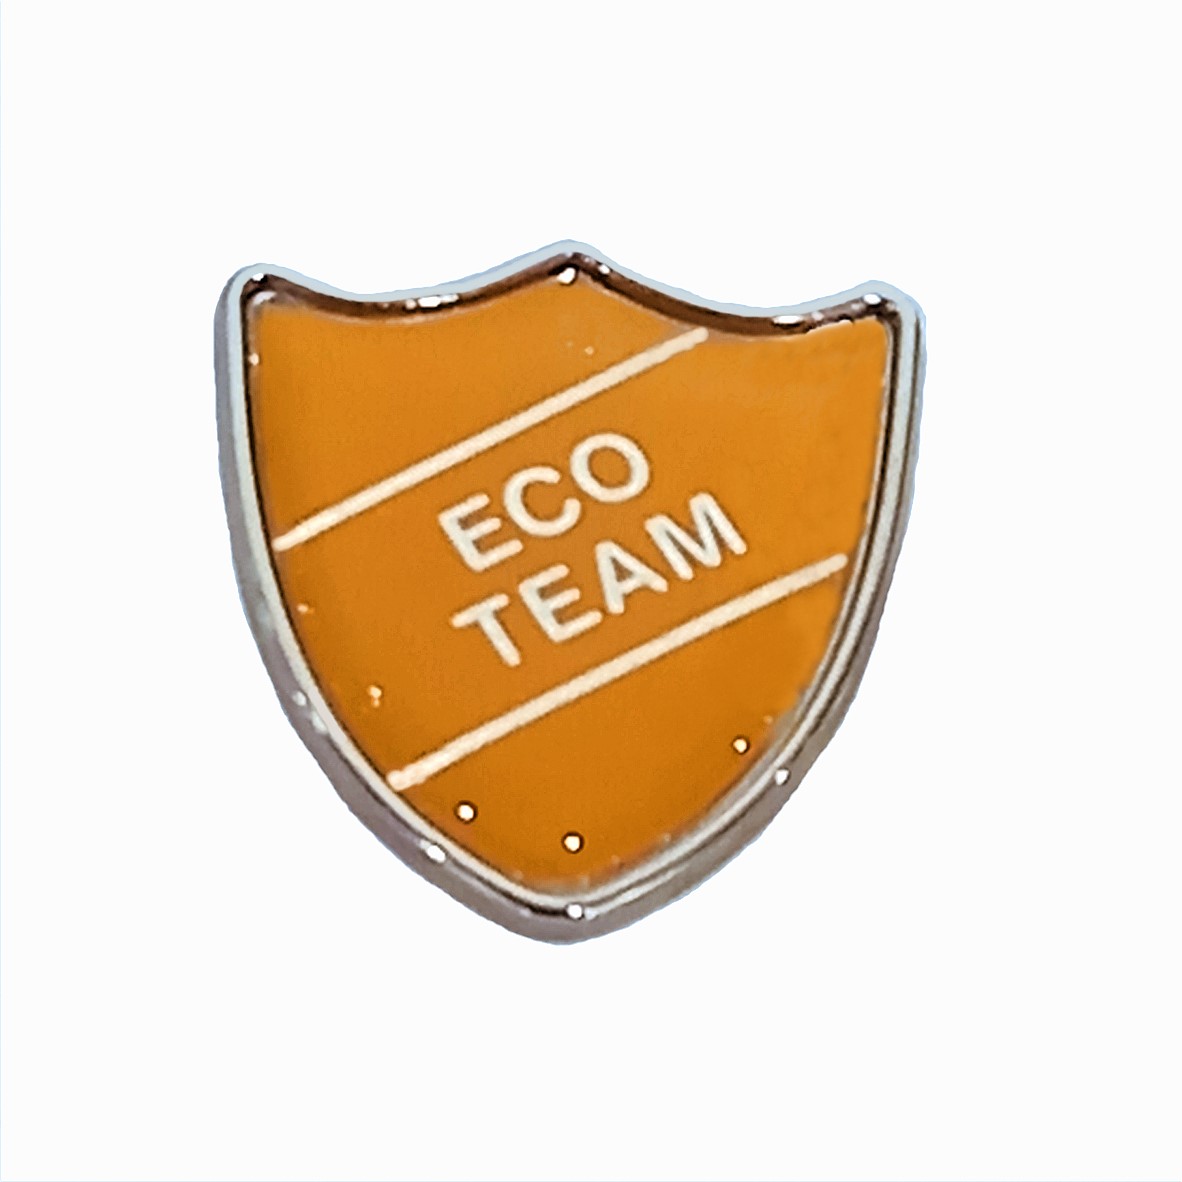 ECO TEAM shield badge